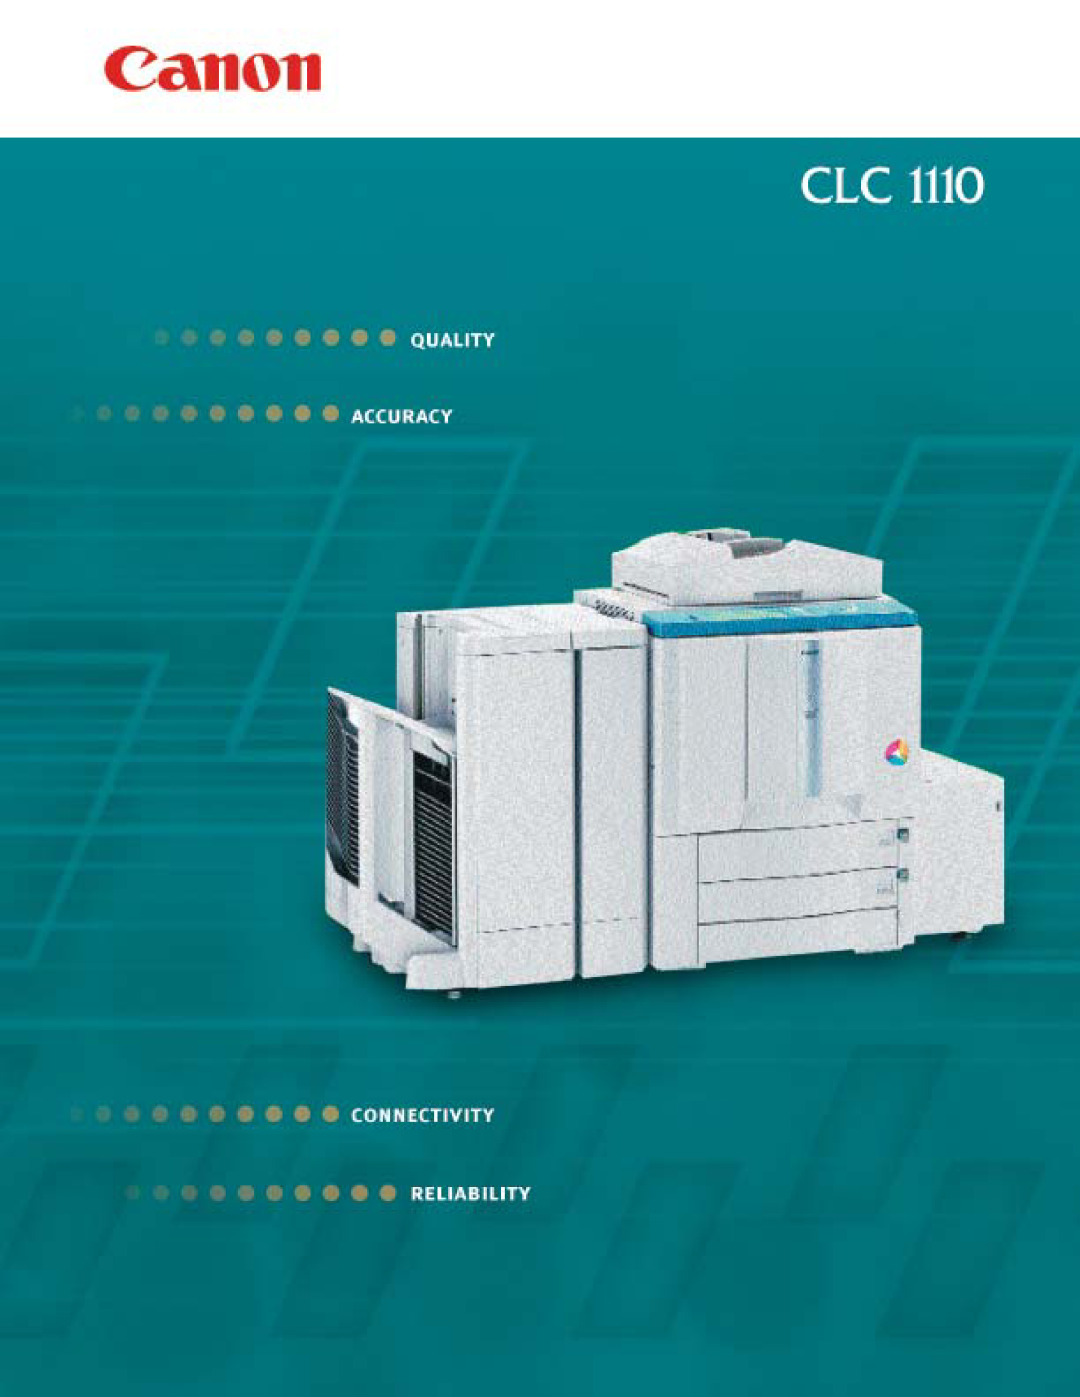 Canon CLC 1110 manual 